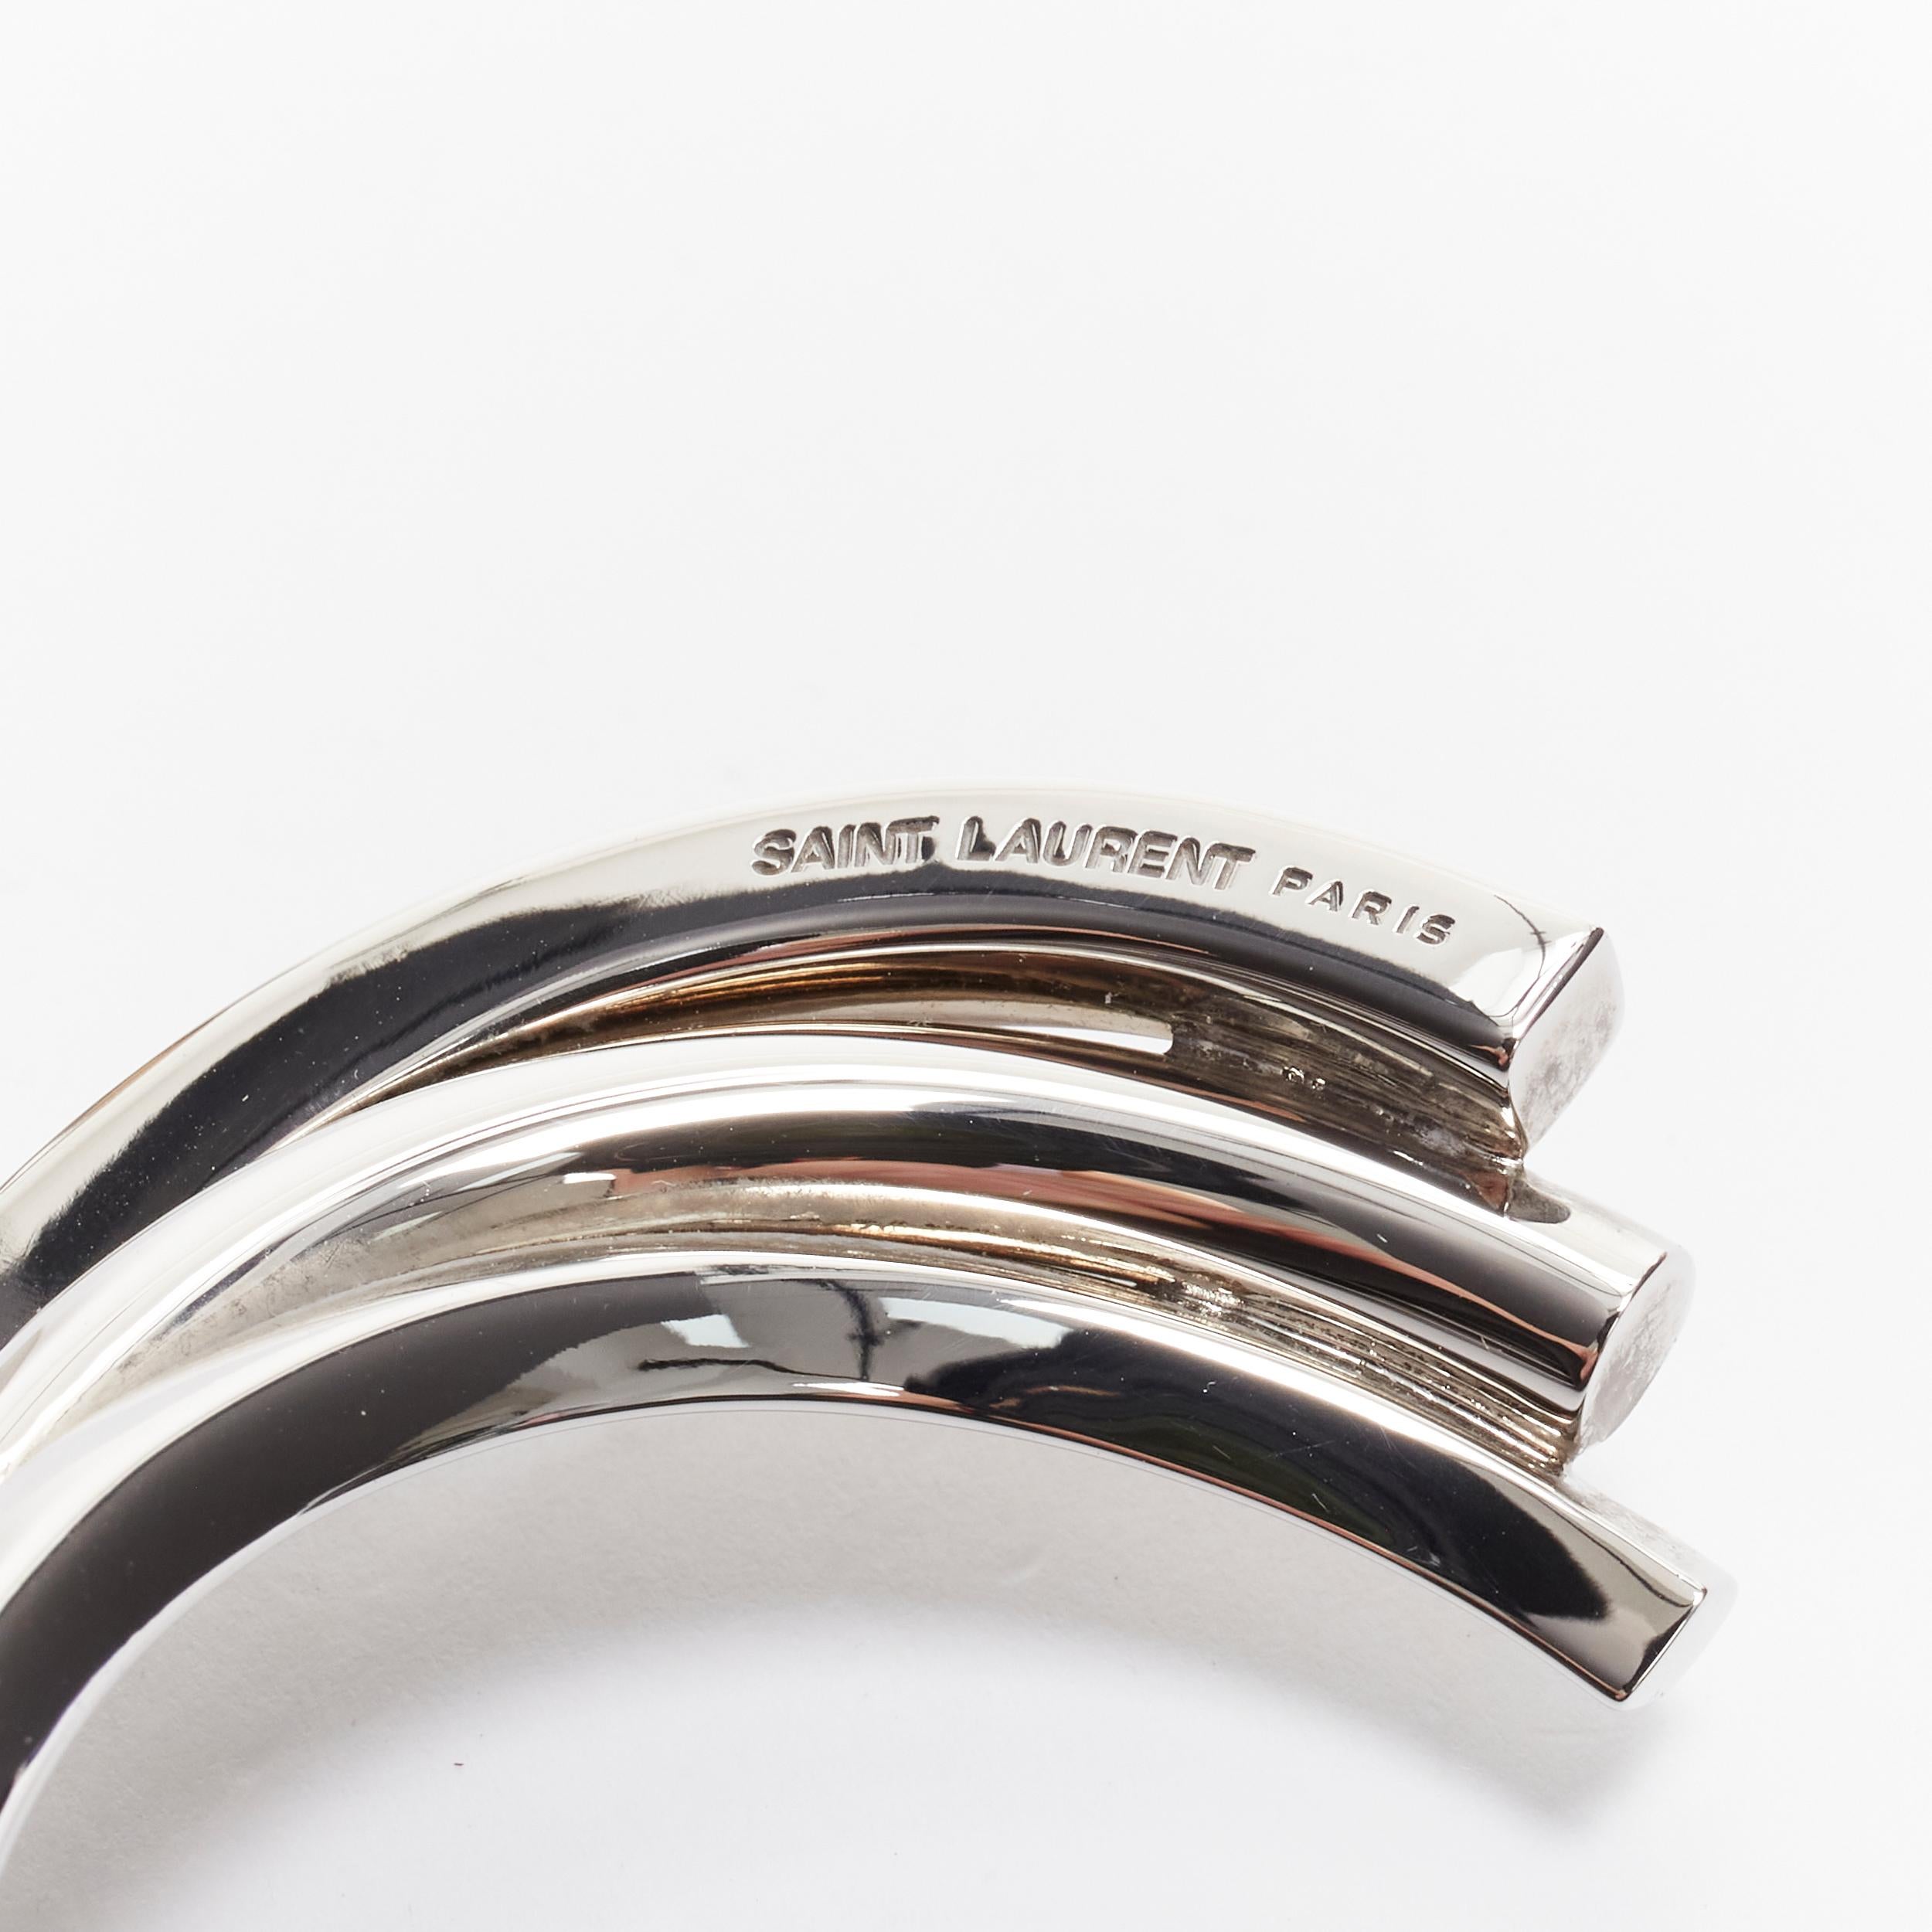 SAINT LAURENT Hedi Slimane silver brass architectural triple twist cuff bracelet 2